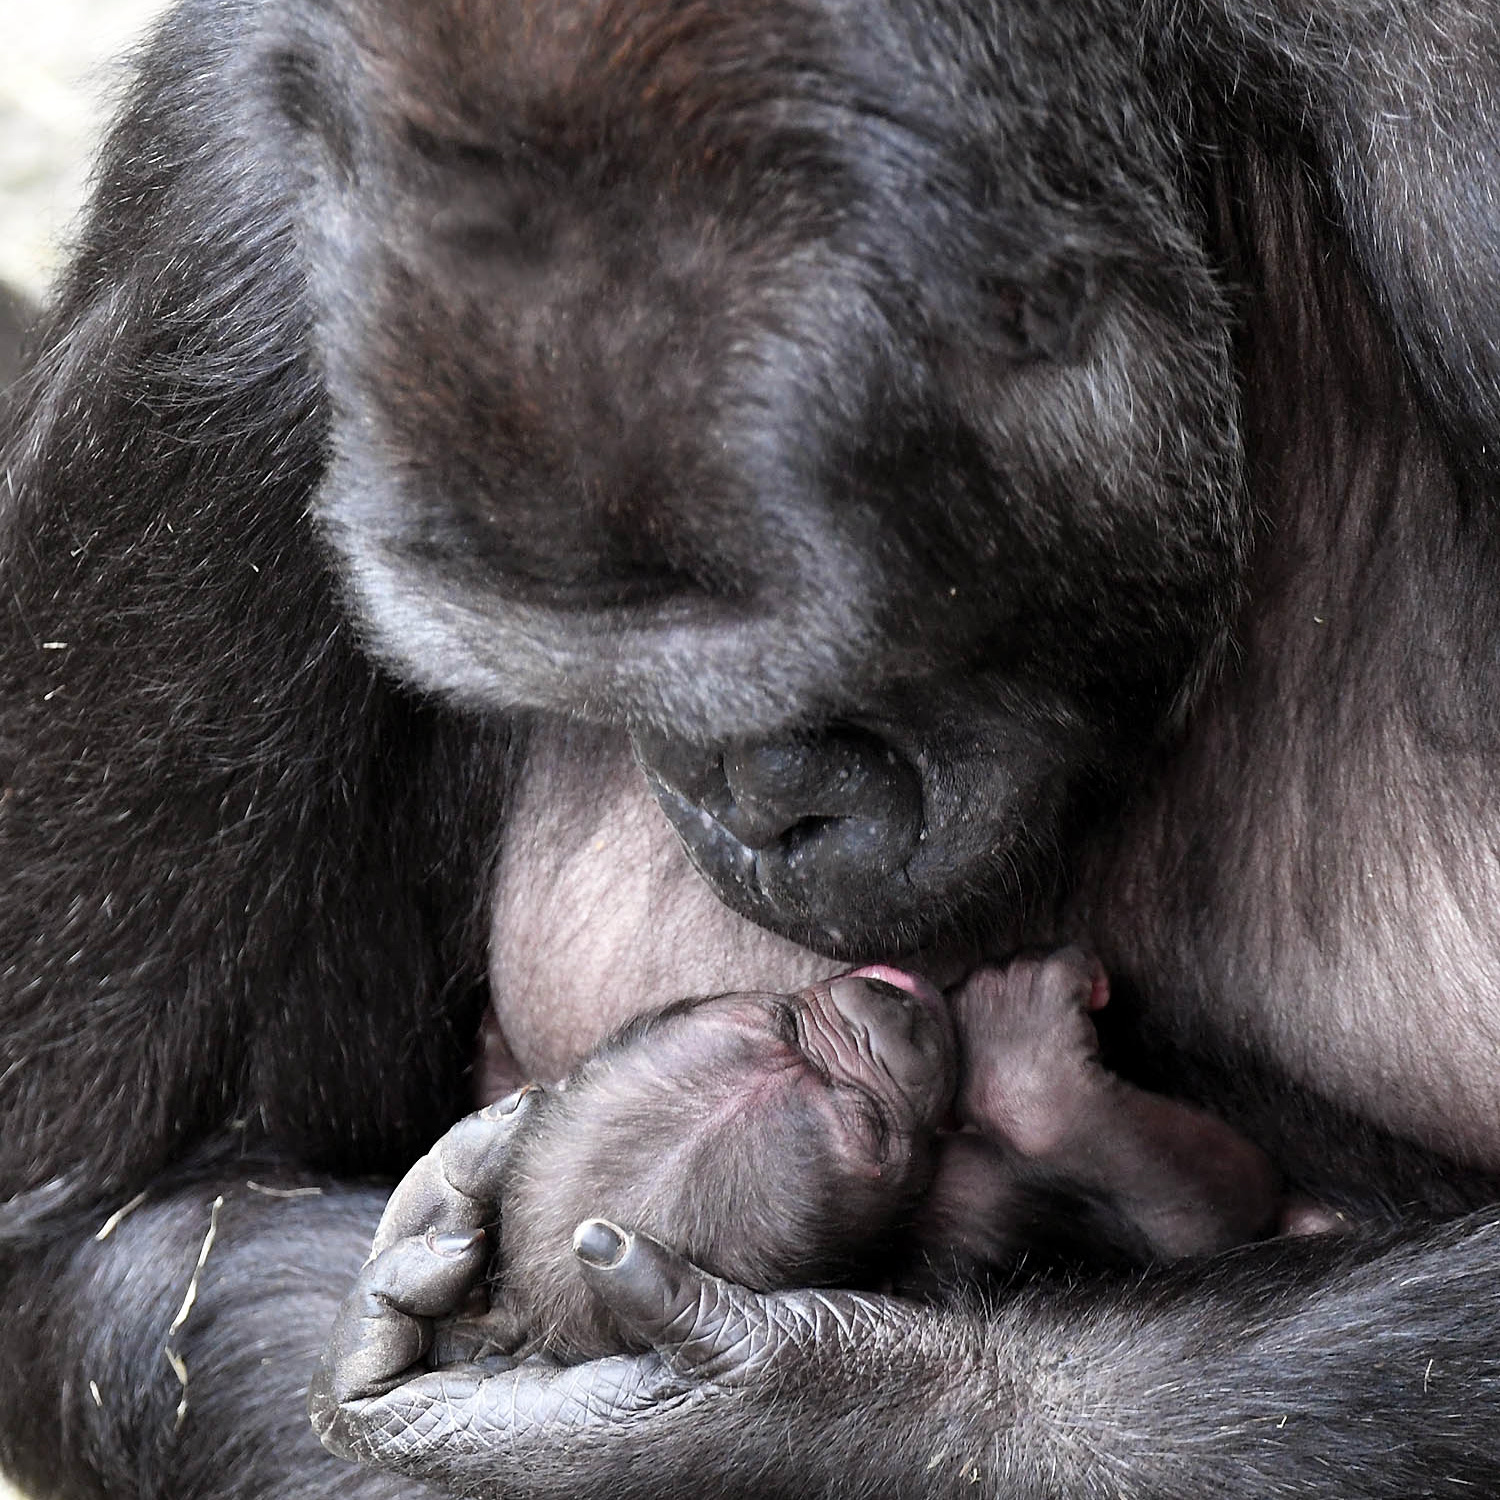 Baby Gorilla born June 1, 2018, Brookfield Zoo